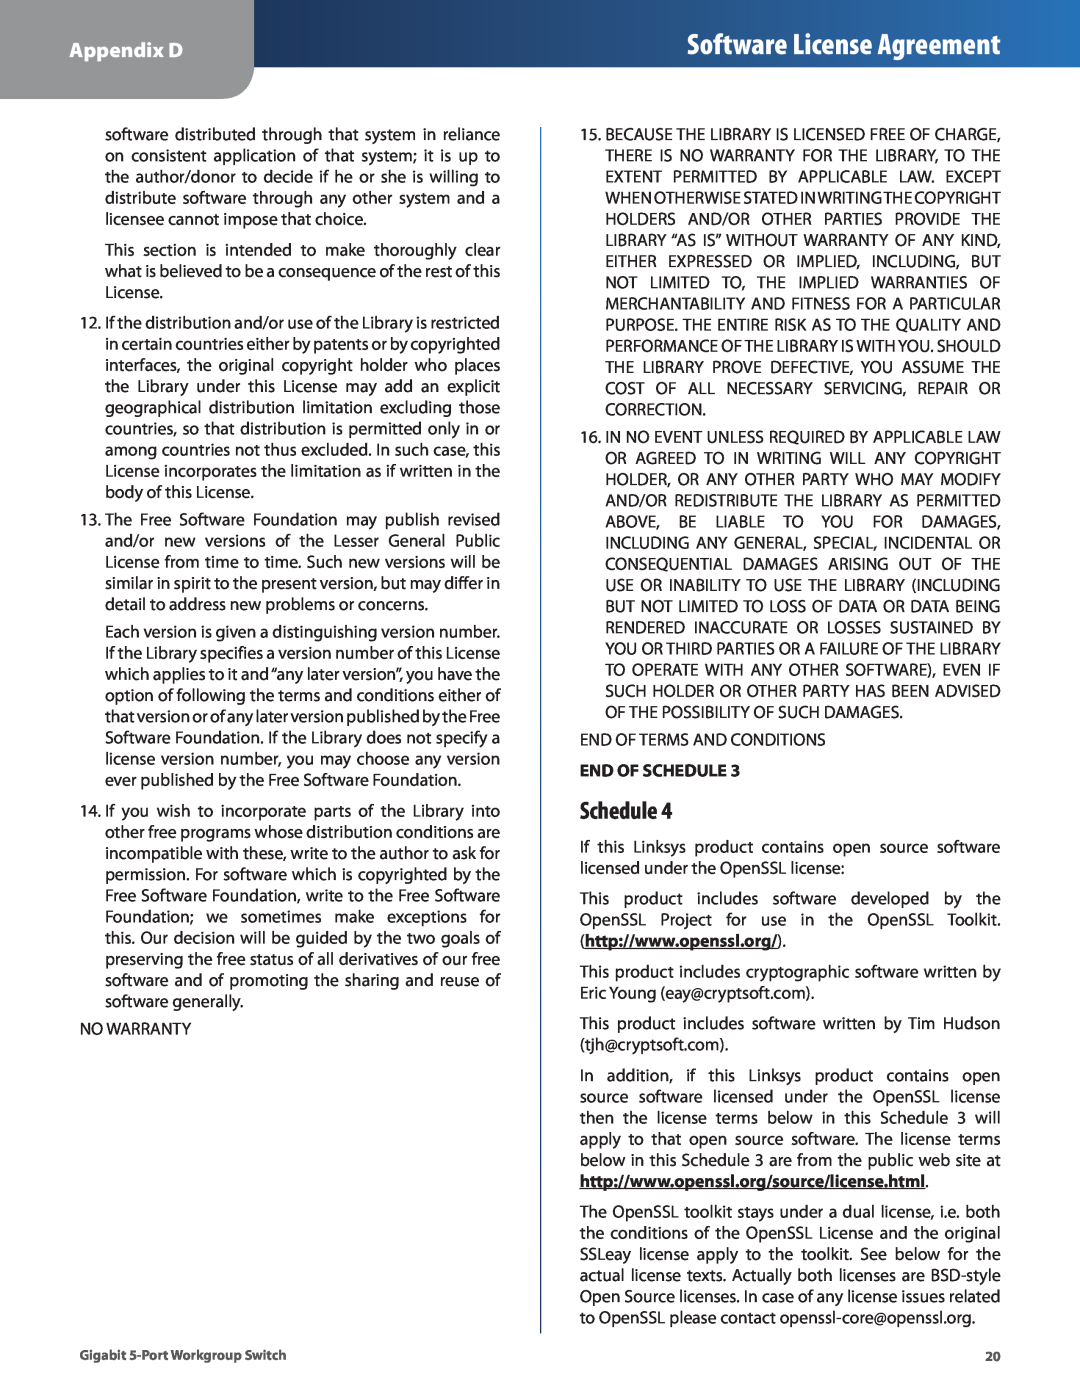 Cisco Systems EG005W manual Software License Agreement, Schedule, Appendix D 